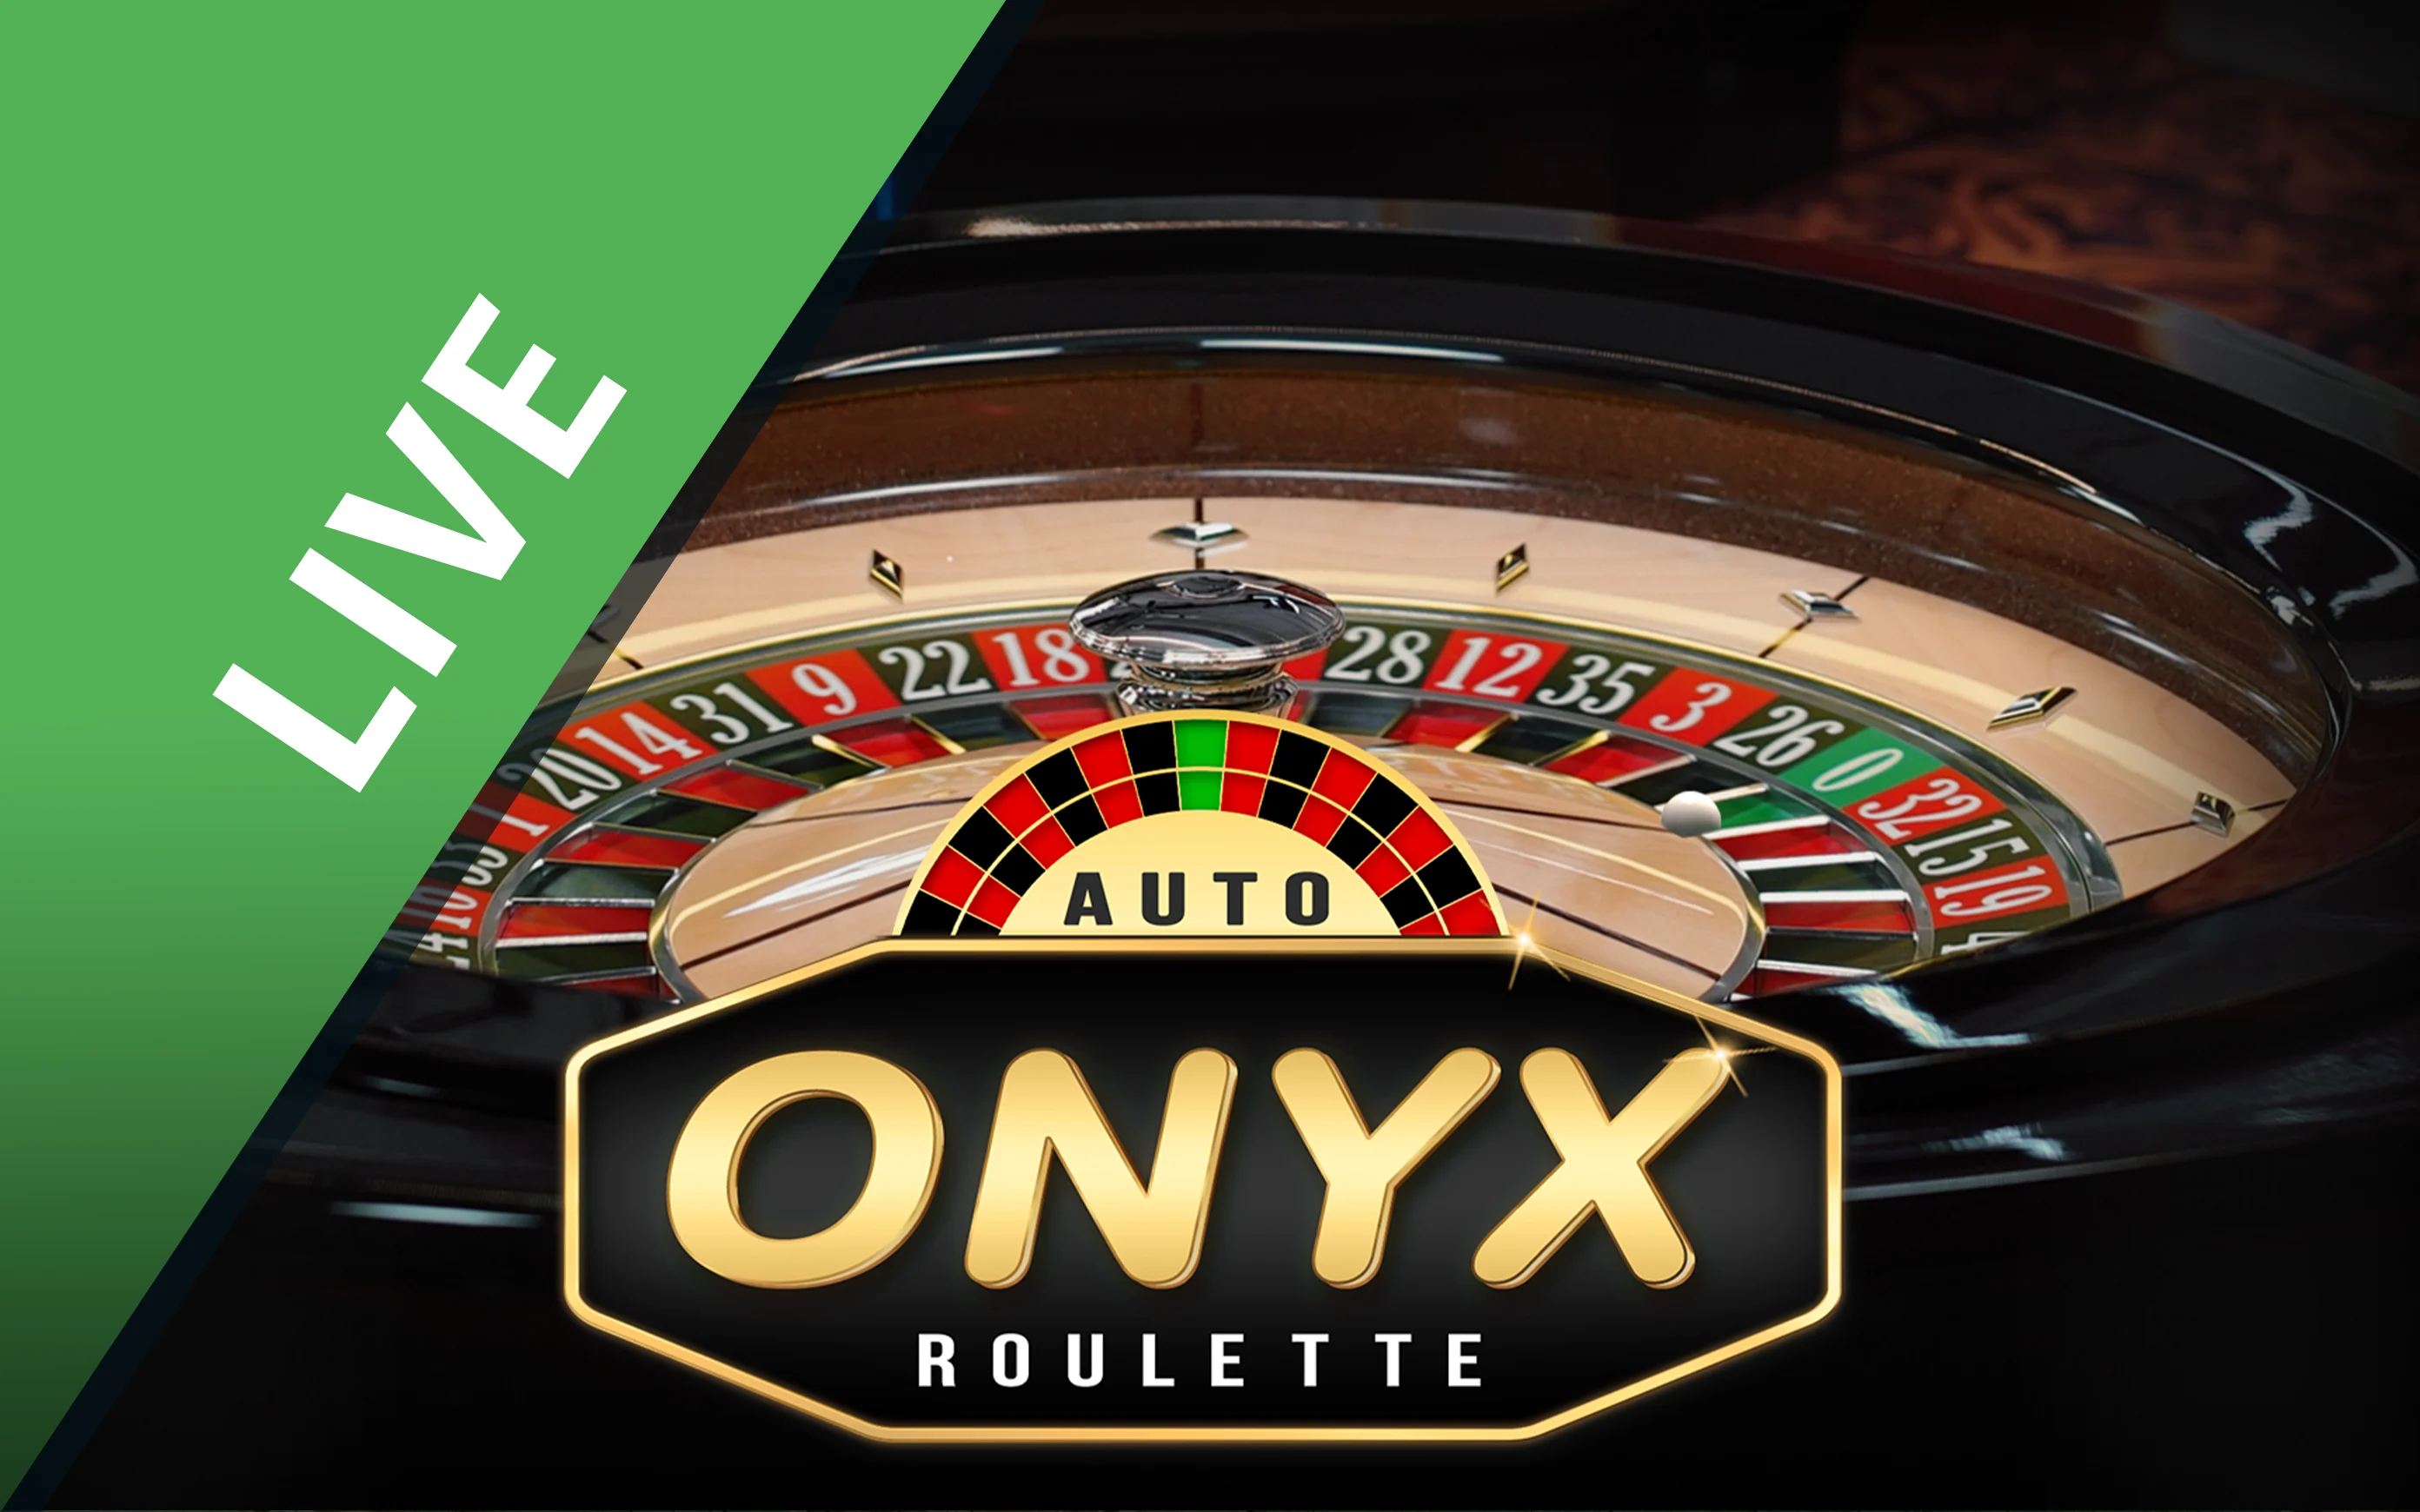 Joacă Onyx Roulette în cazinoul online Starcasino.be